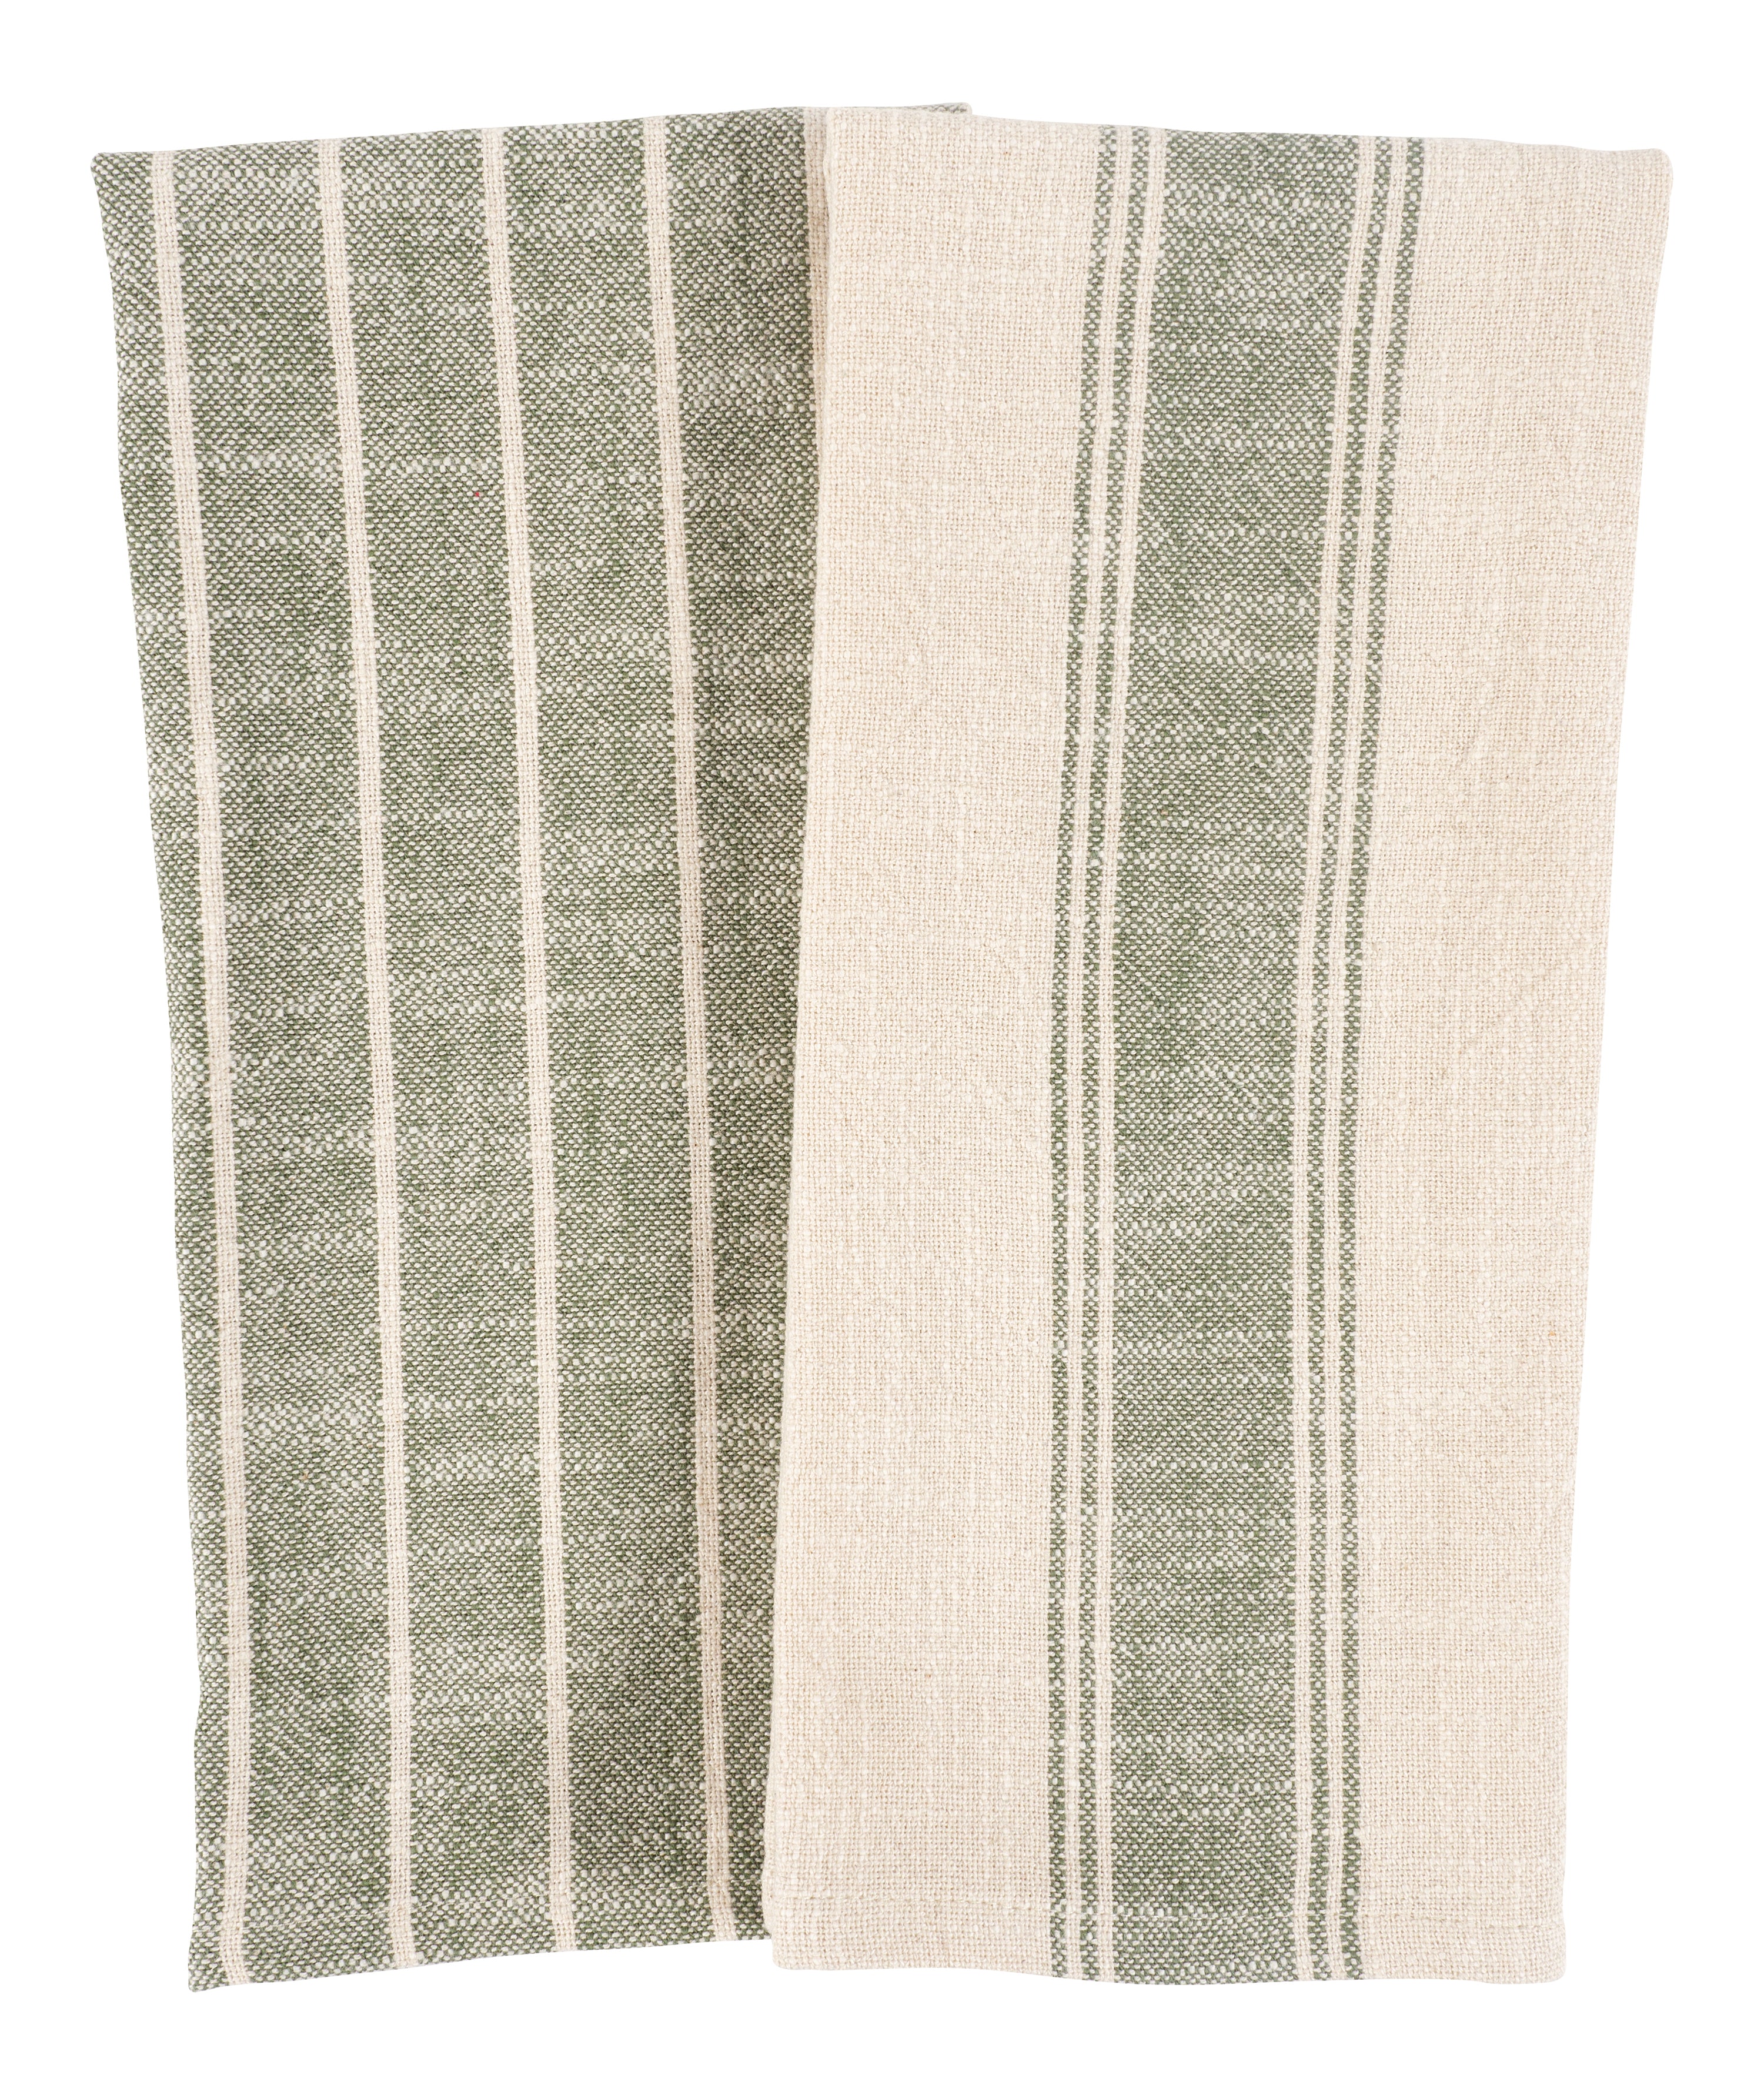 Classic Linen Kitchen Towels Set of 2 100% Pure Linen Dish 